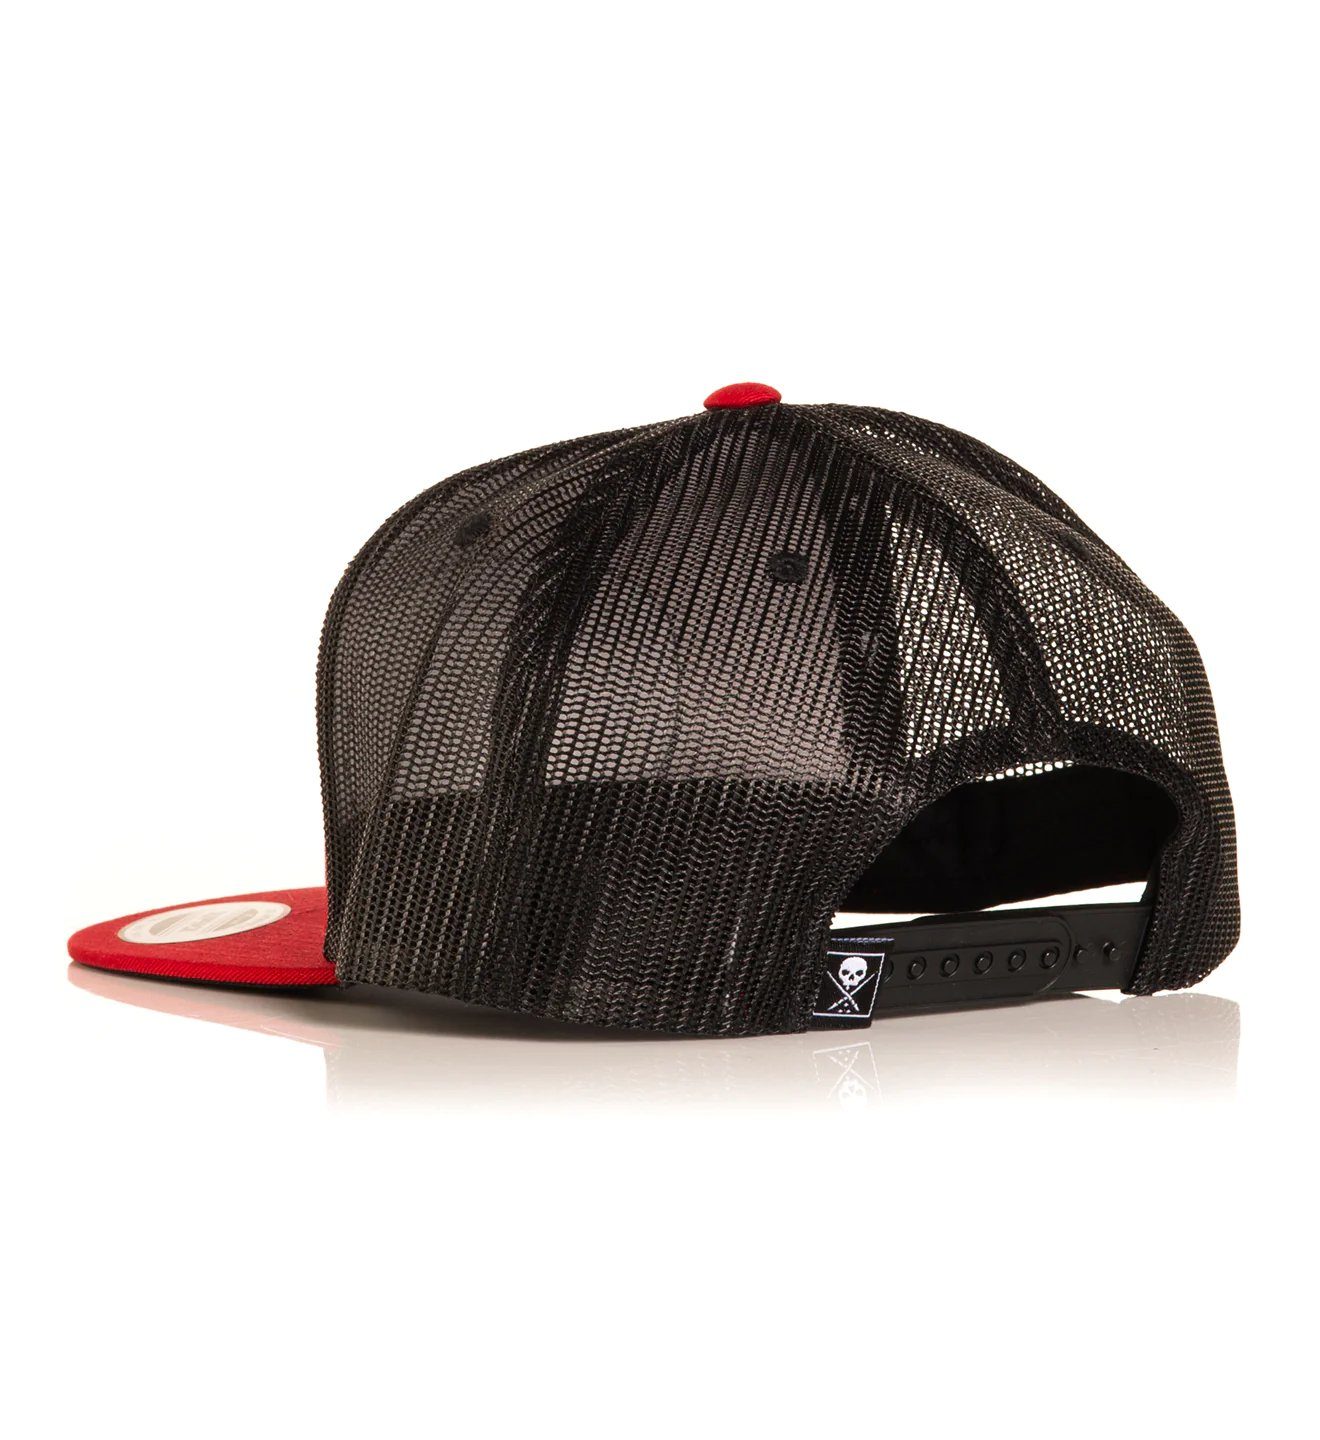 Baseball Sullen Clothing Supply Red Cap